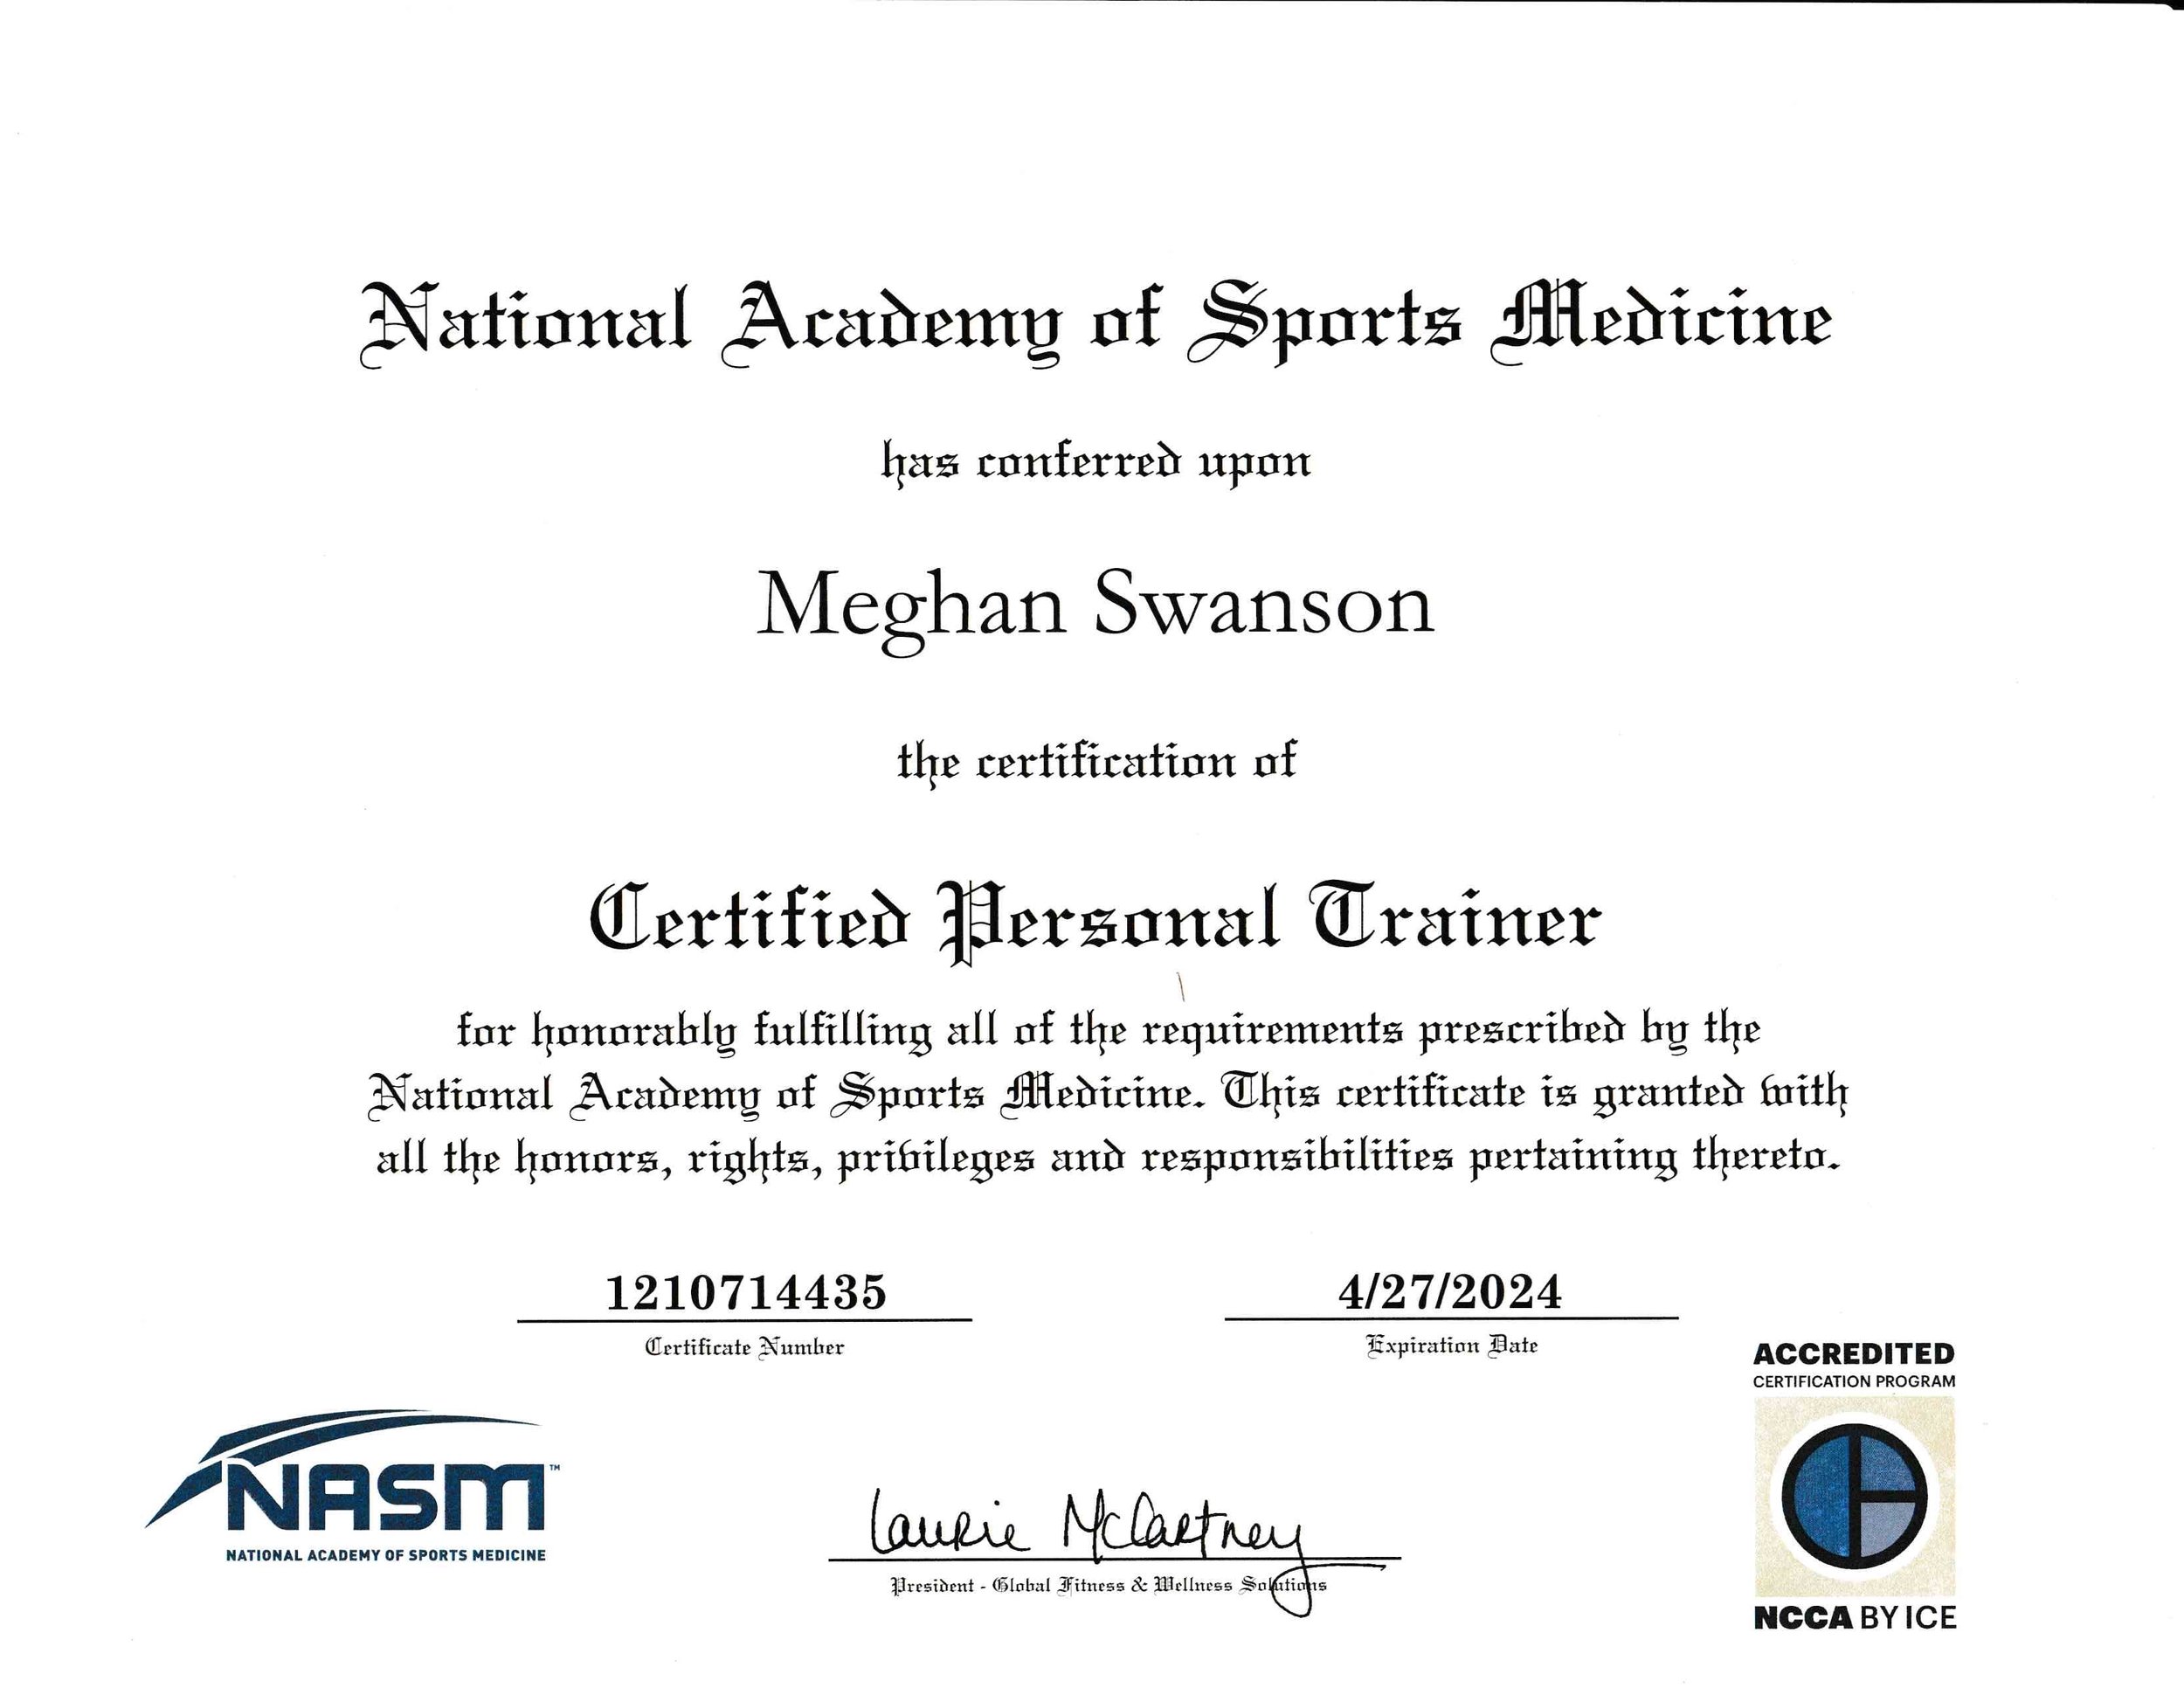 MeghanSwasnson-NASM-CertifiedPersonalTrainer